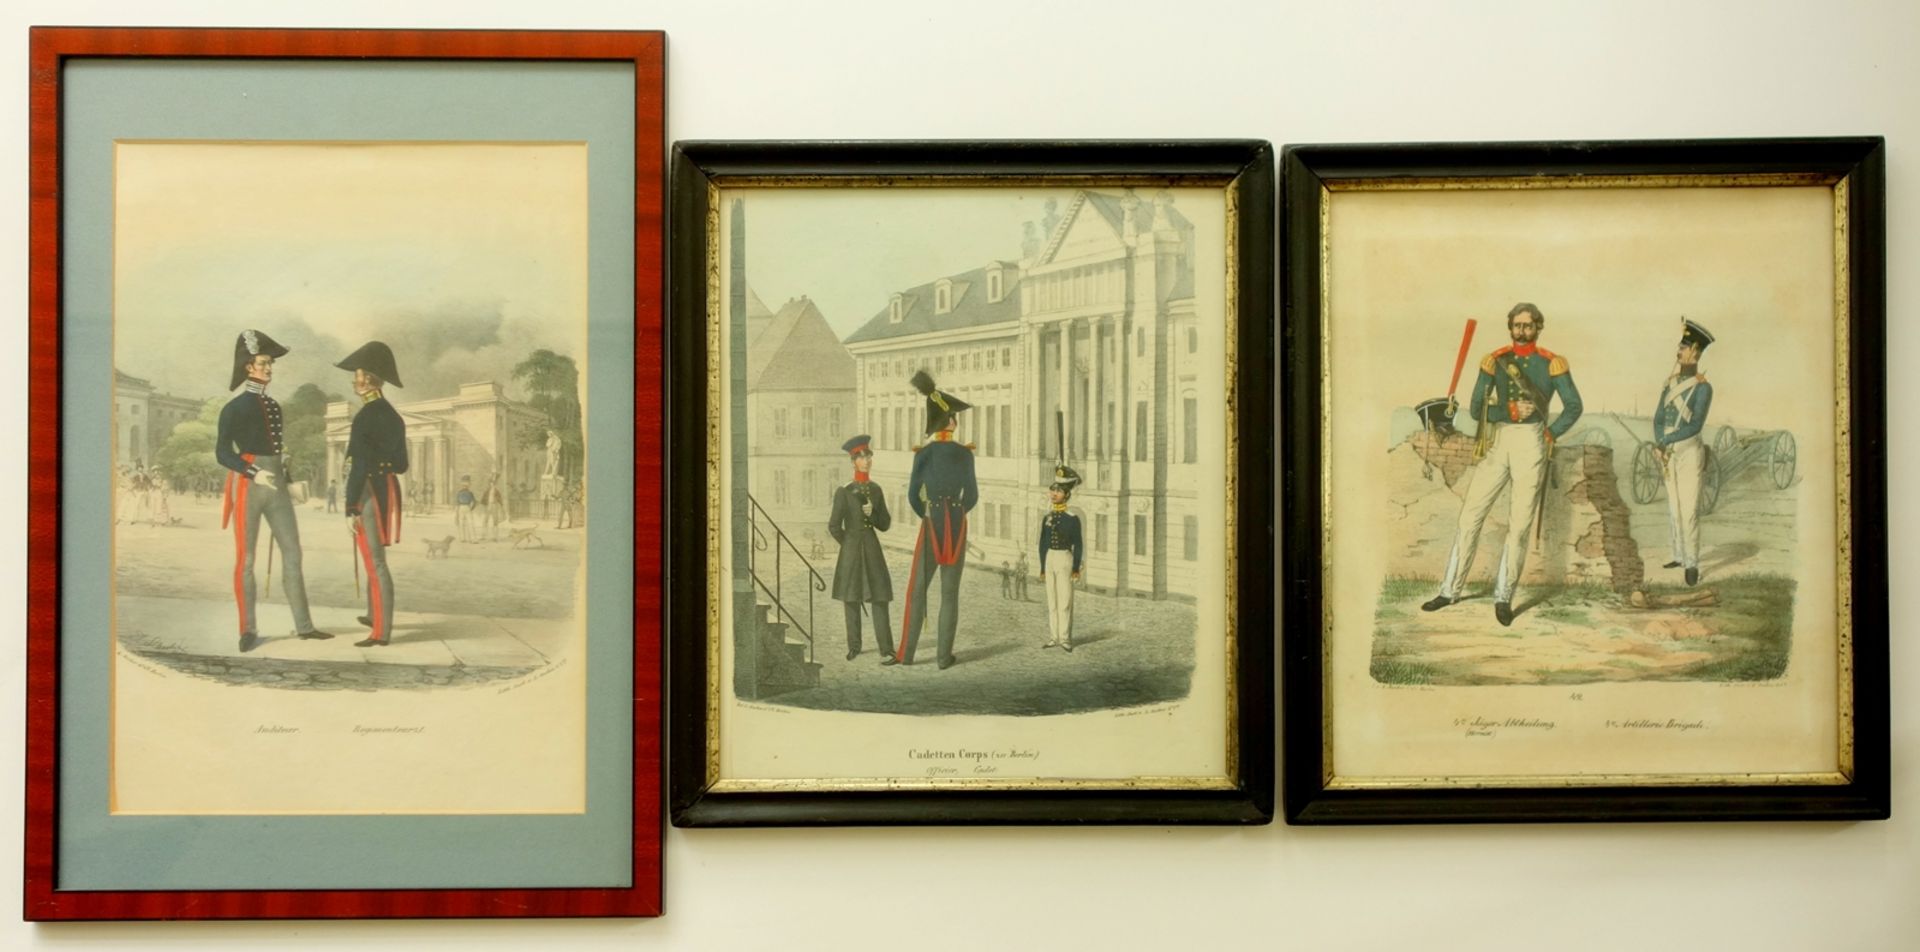 3 kolorierte Lithografien aus "Das Preußische Heer", 1830, 1* Cadetten Corps, 1* Jäger-Abtheilung/